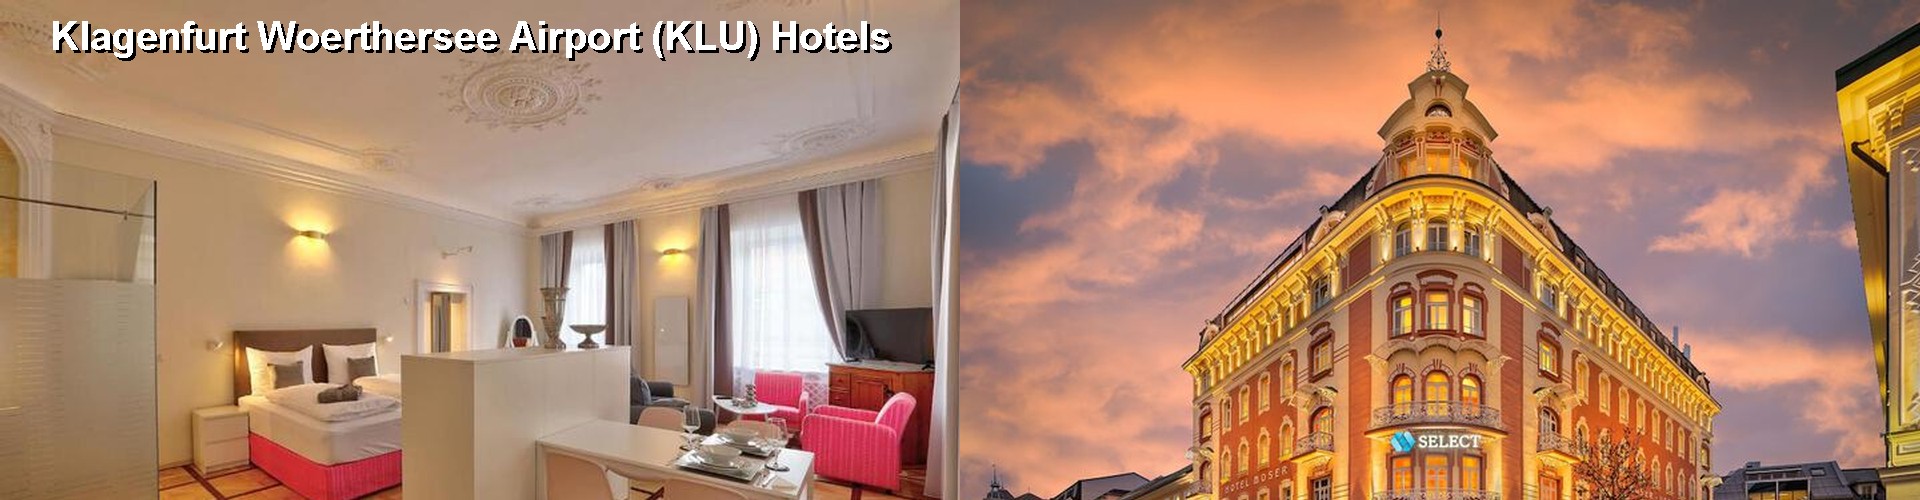 5 Best Hotels near Klagenfurt Woerthersee Airport (KLU)